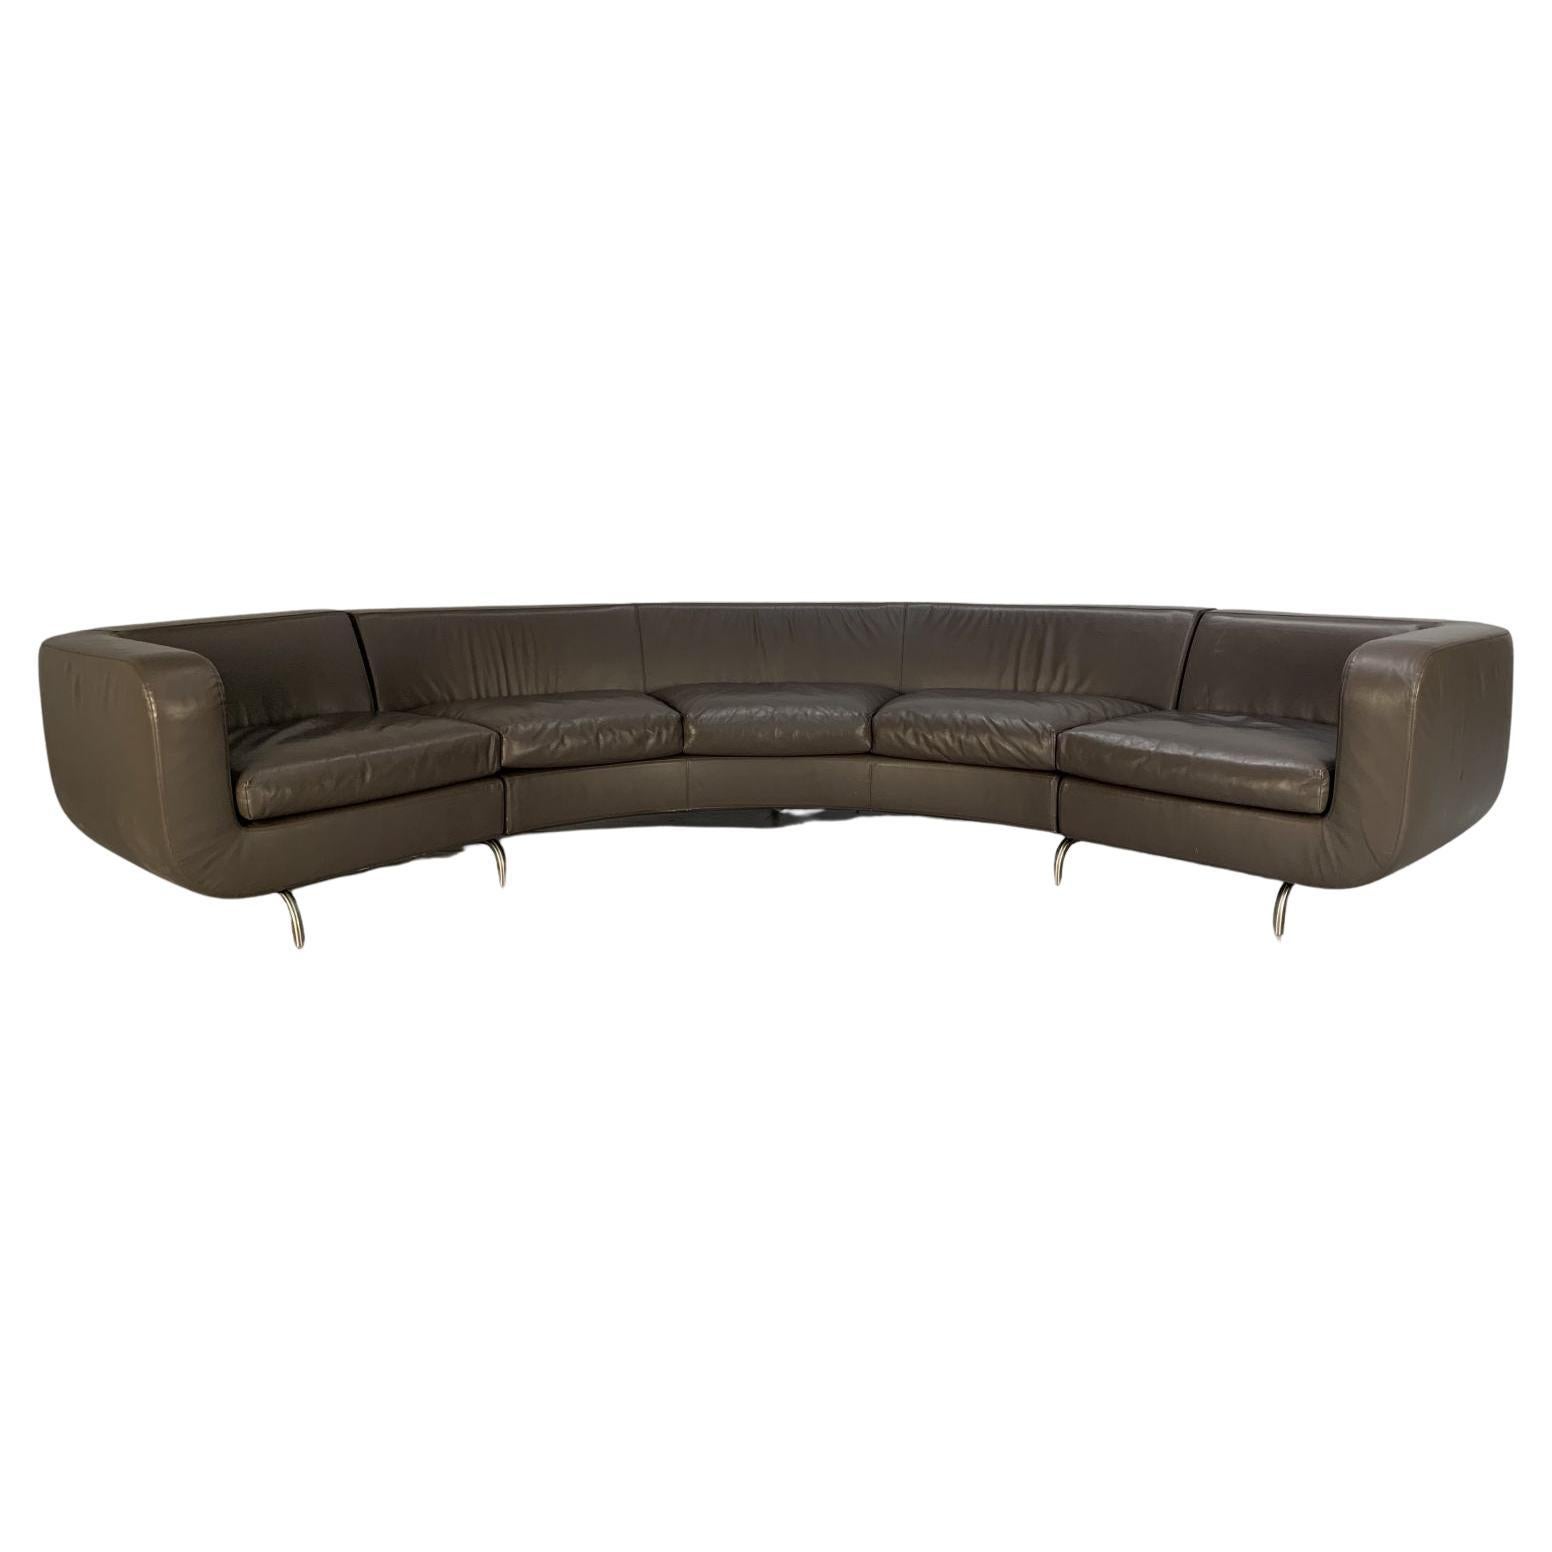 Rare Minotti “Dubuffet” Curved Sofa – in Dark Grey “Pelle” Leather